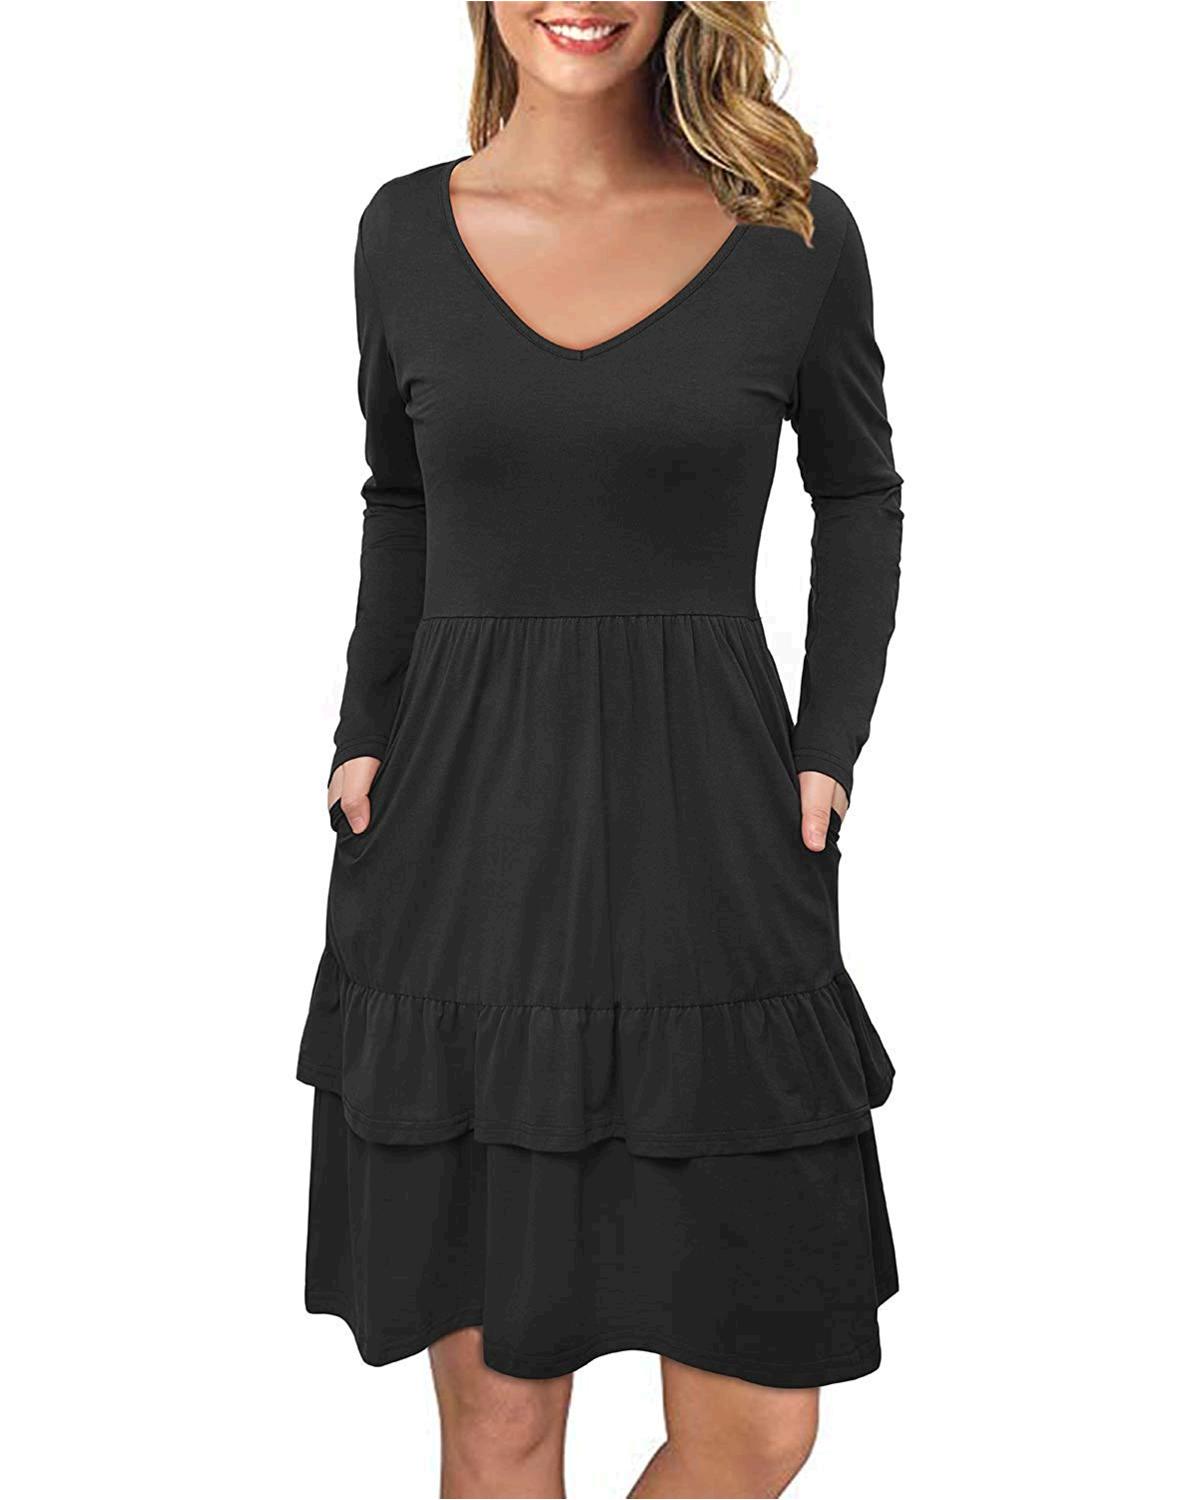 OUGES Women's V Neck Long Sleeve Ruffle Casual Short Dress, Black477 ...